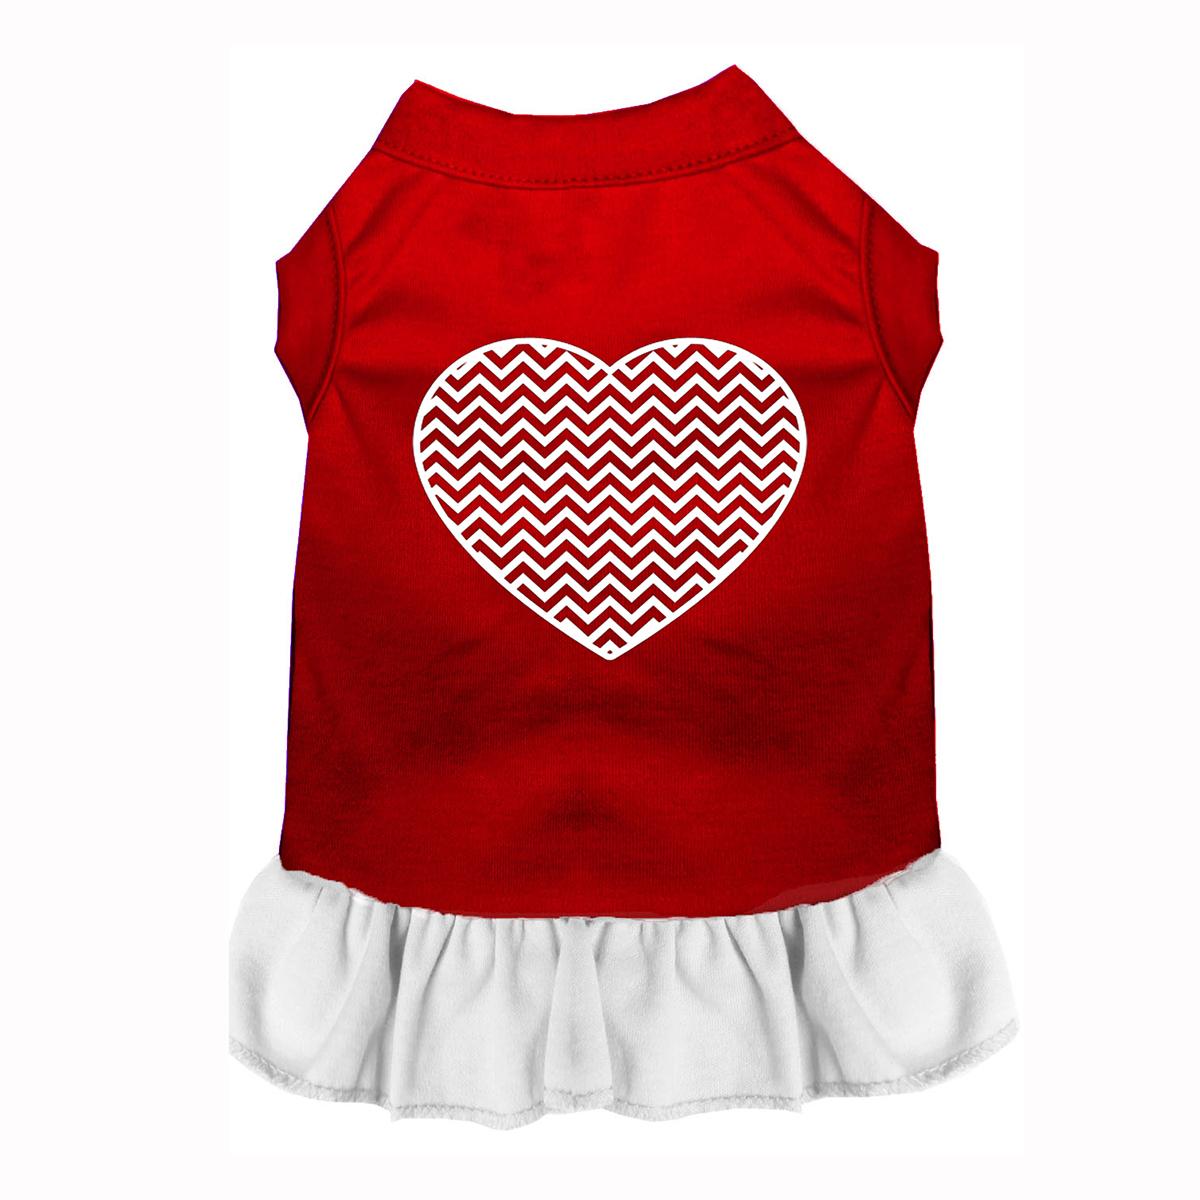 Chevron Heart Screenprint Dog Dress, Red & White Skirt - Medium